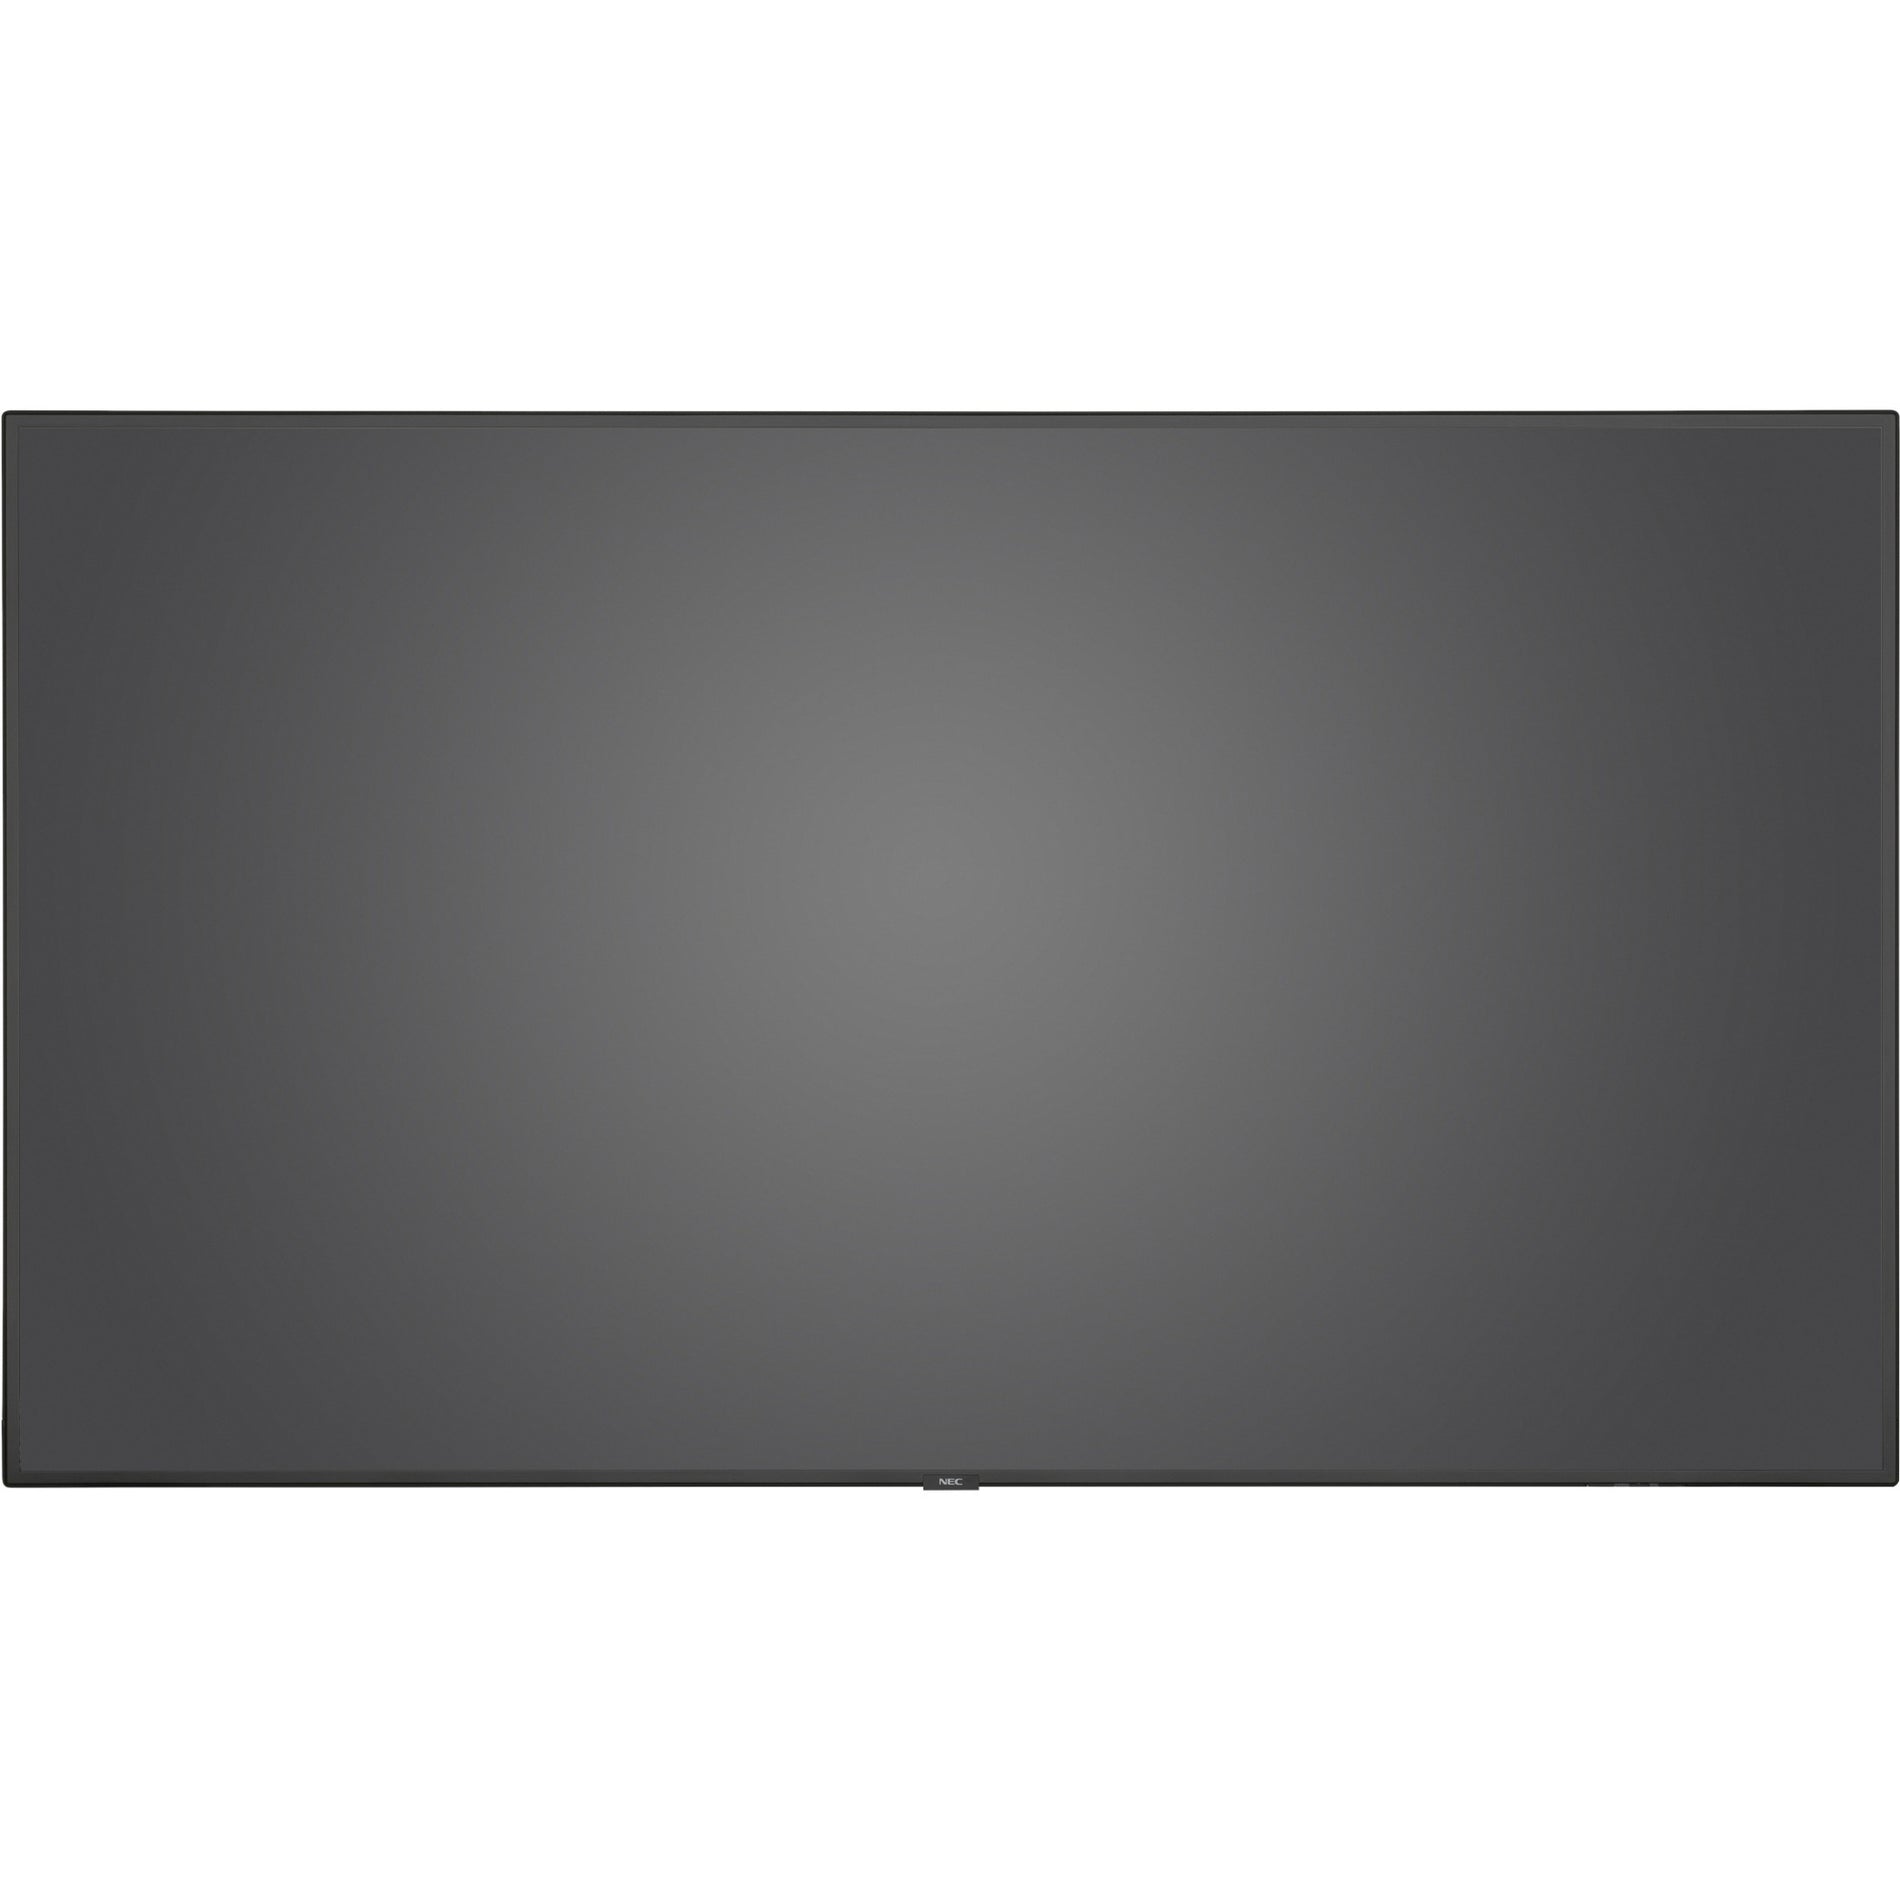 NEC Display V984Q 98" Ultra High Definition Professional Display, 500 Nit, 72% NTSC, 2160p